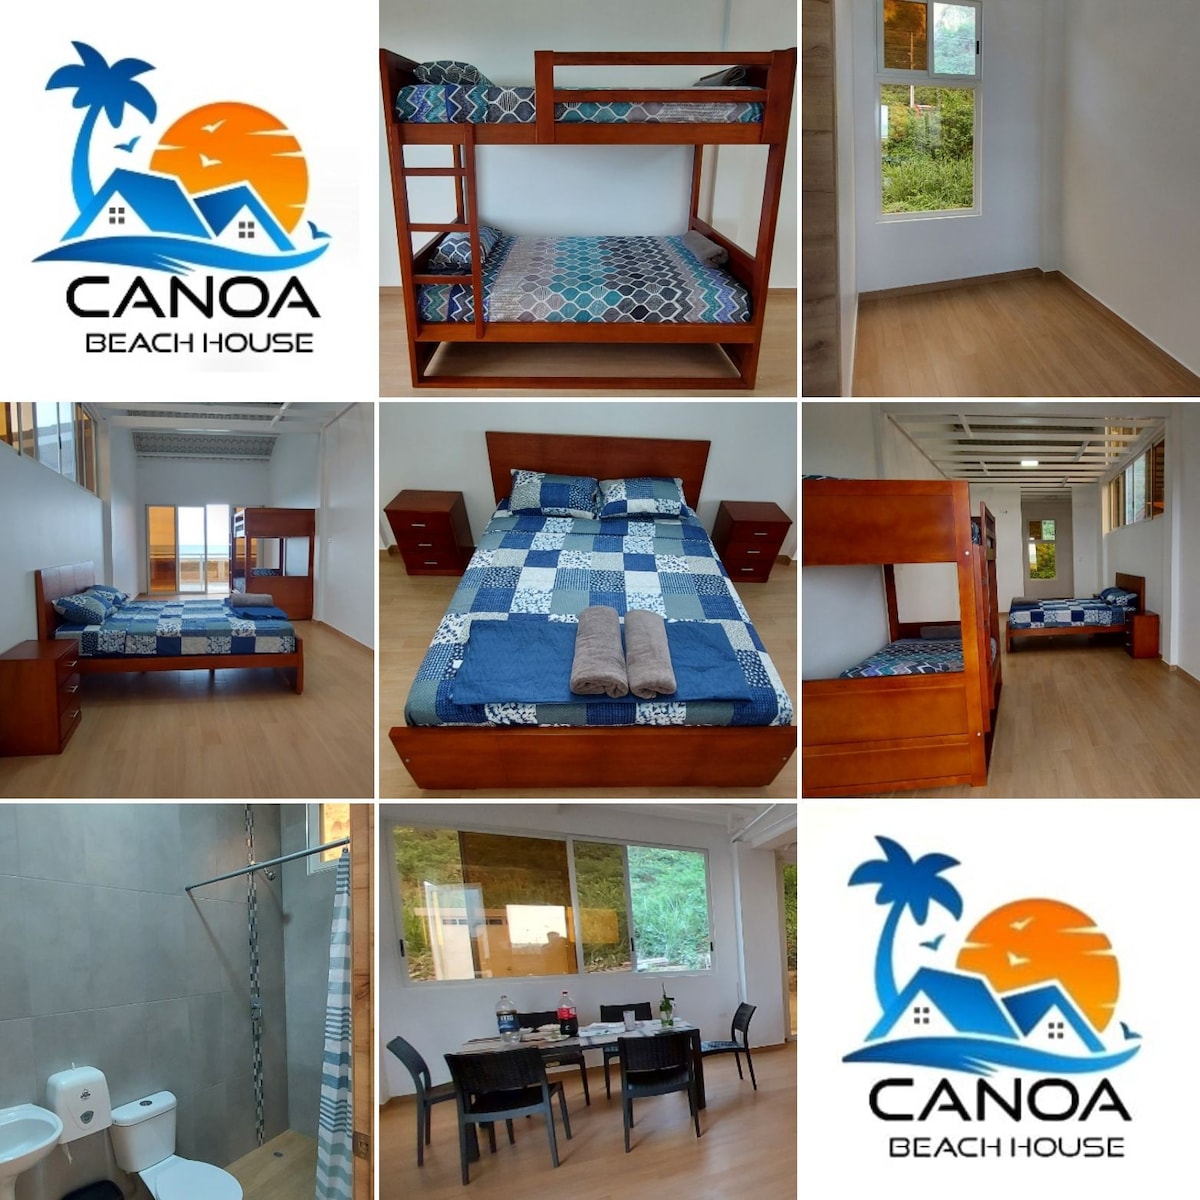 🏖🏡Casa de Playa en Canoa- Manabí

太平洋娱乐区（ Pacific Recreation Sector ） ，很高兴您在100%家具齐全的套房提供舒适愉快的出租服务，并提供所有便利设施。
 
🎯与SDGs一致